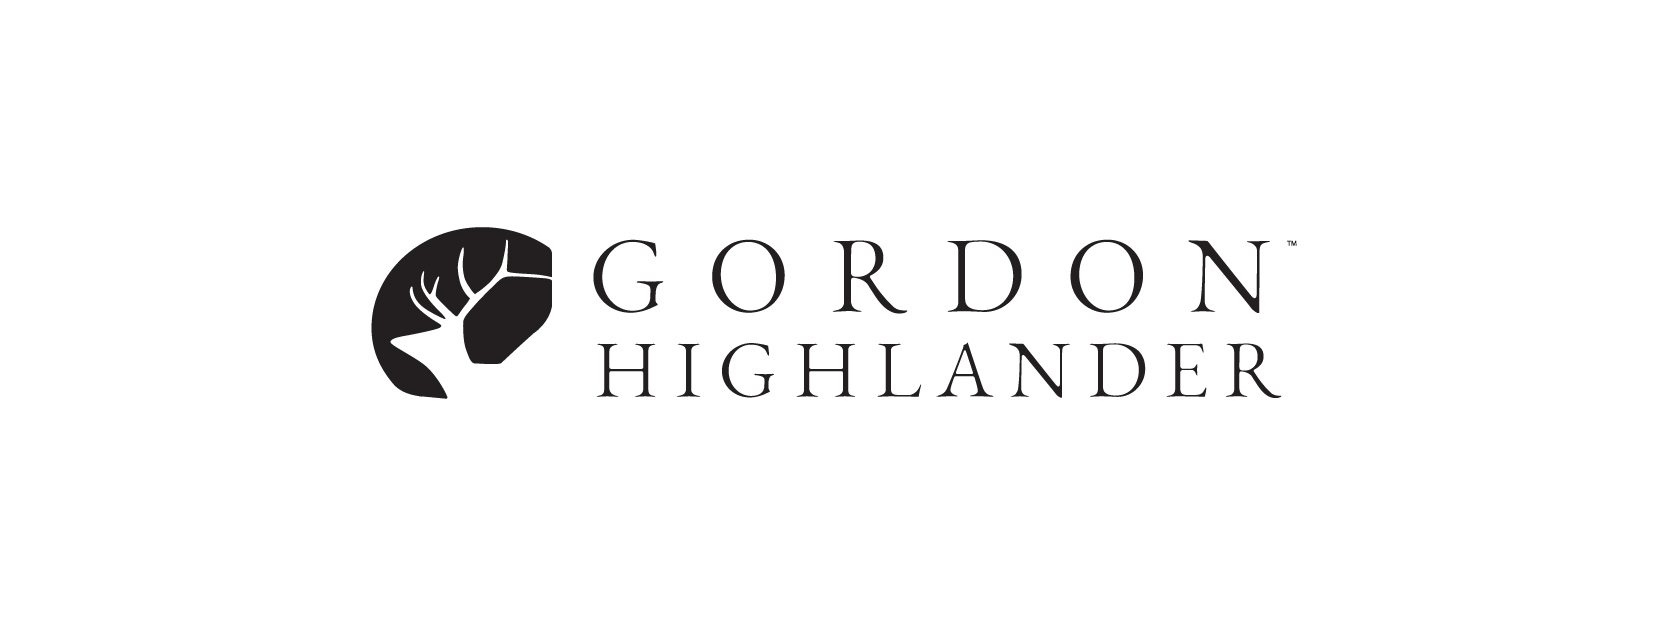 Gordon Highlander Company Logo